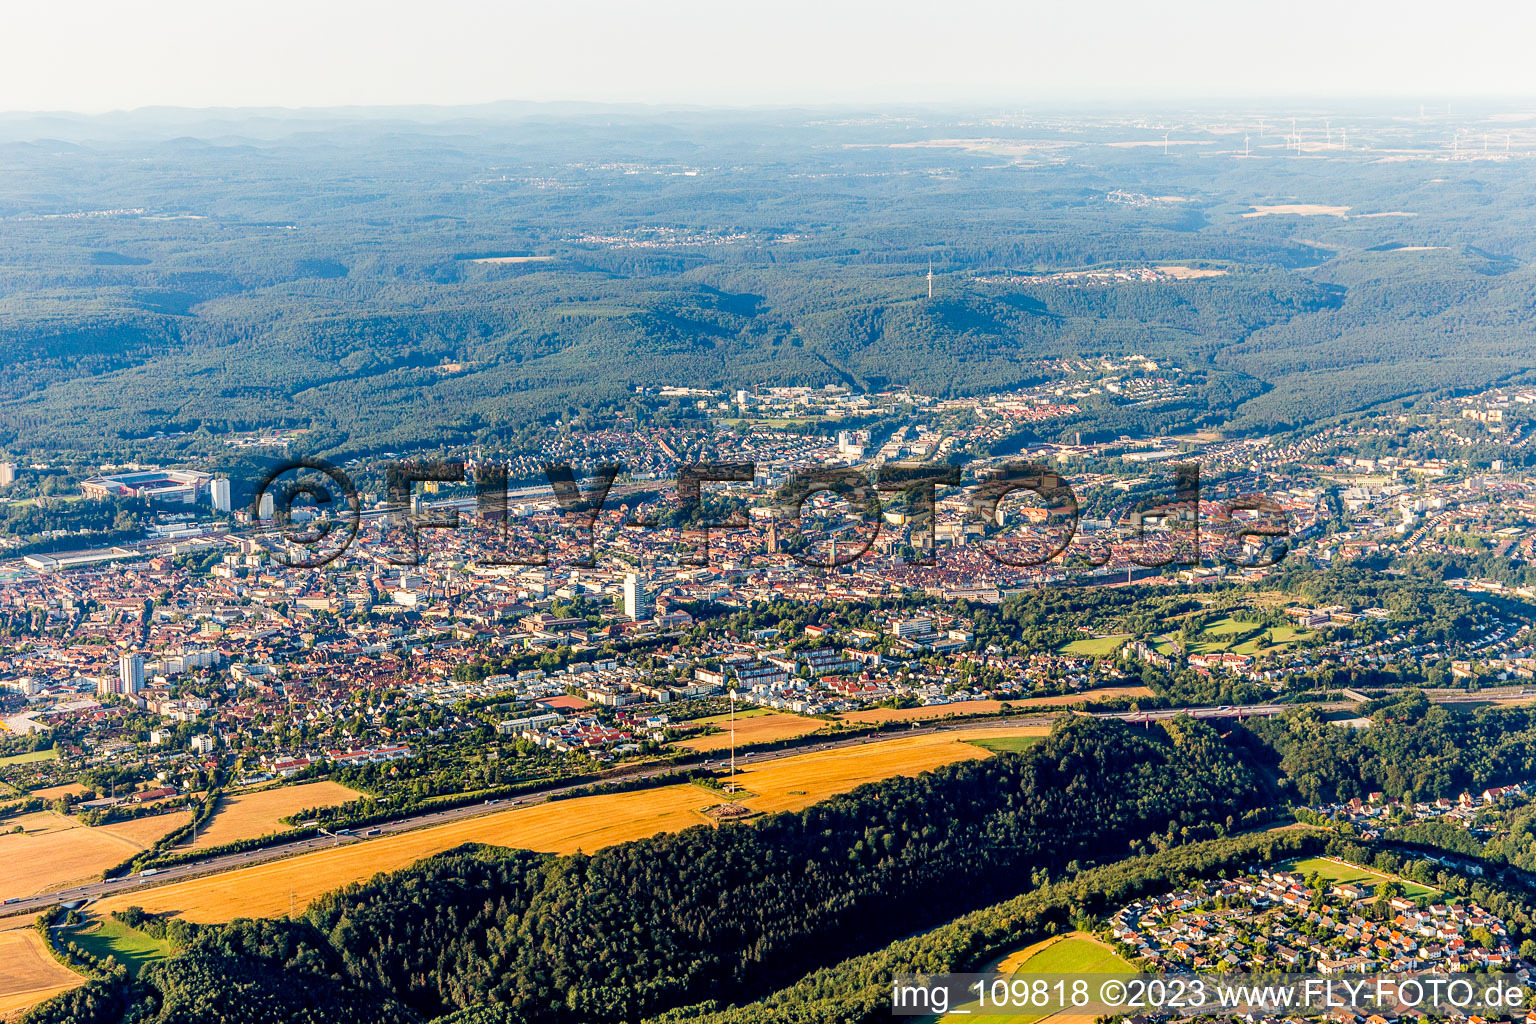 Drone image of Kaiserslautern in the state Rhineland-Palatinate, Germany